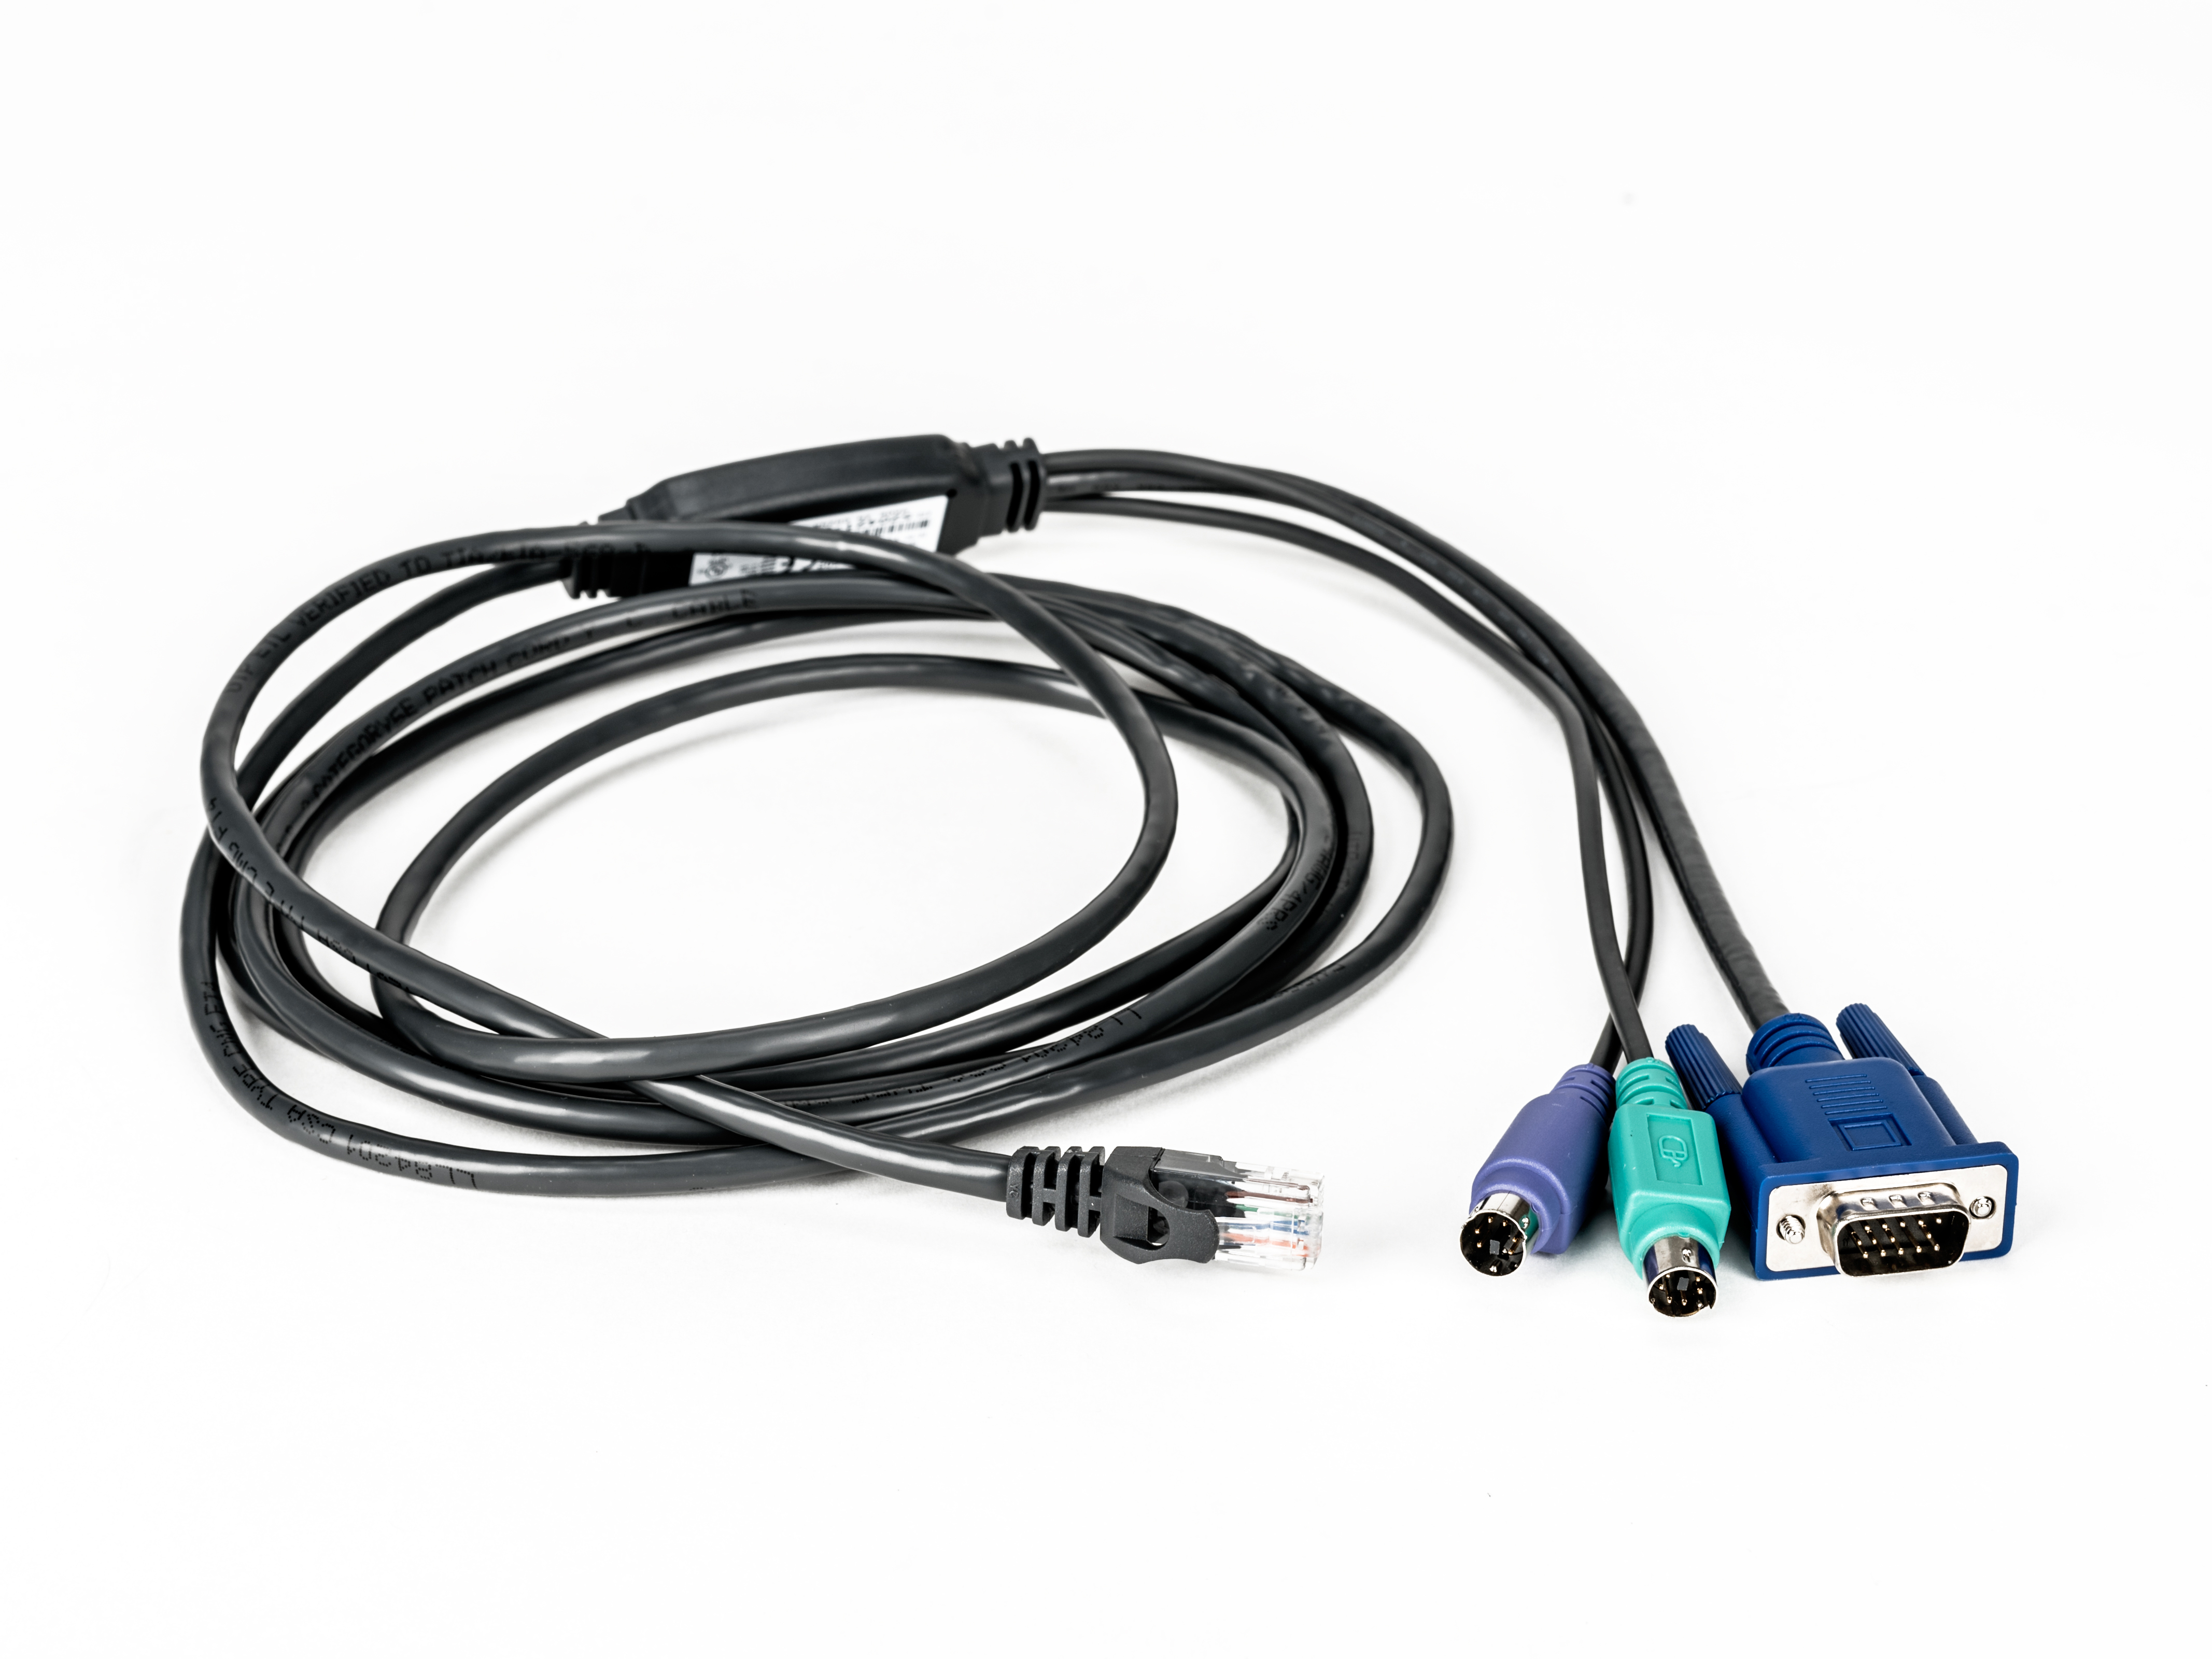 Avocent - Keyboard / video / mouse (KVM) cable - PS/2, HD-15 (VGA) (M) to RJ-45 (M) - 10 ft - for AutoView 1400, 1500, 2000, 2020, 2030, AV3108, AV3216